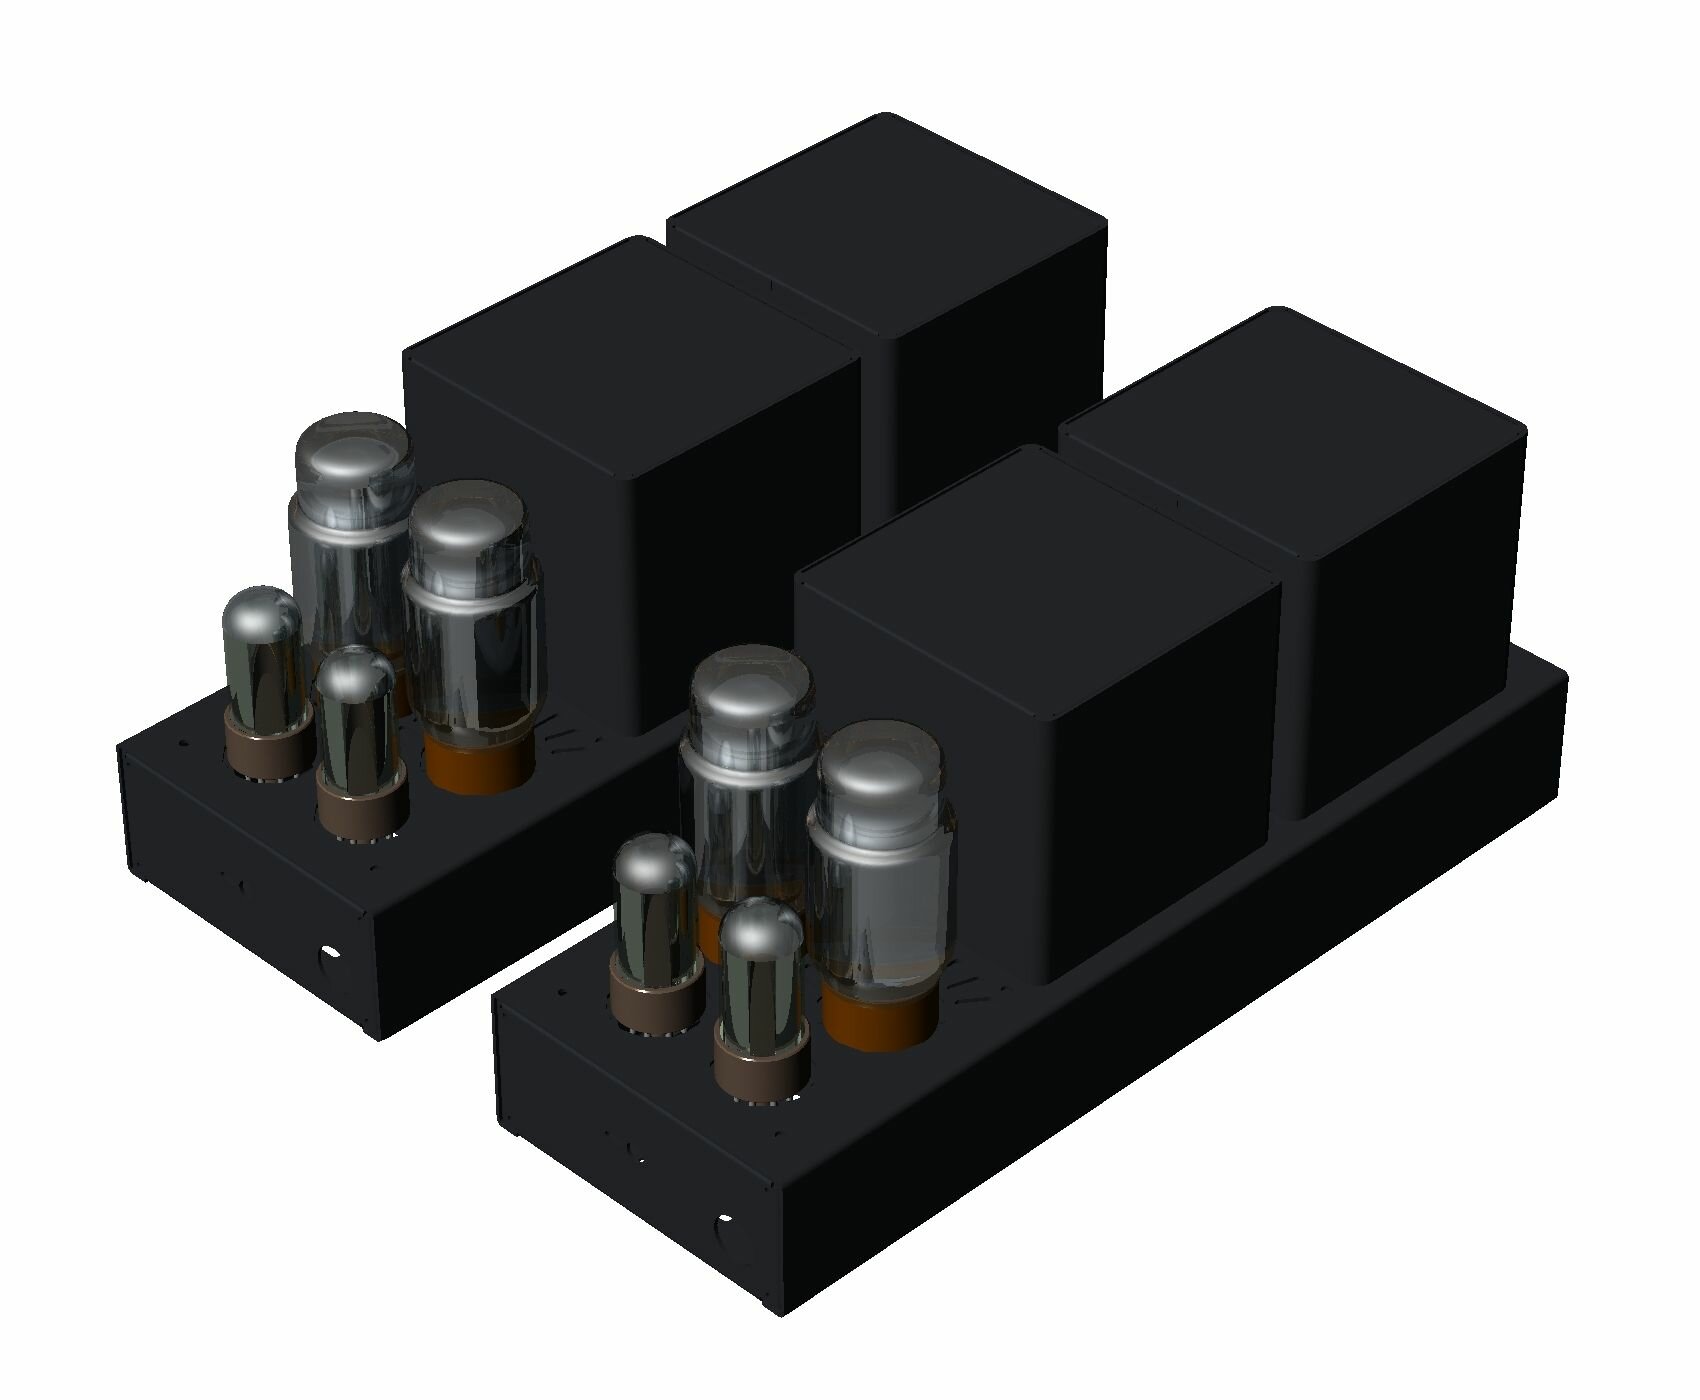 AV-PP50-2I Корпуса моноблоков мощных ламповых усилителей на 2х4 лампах